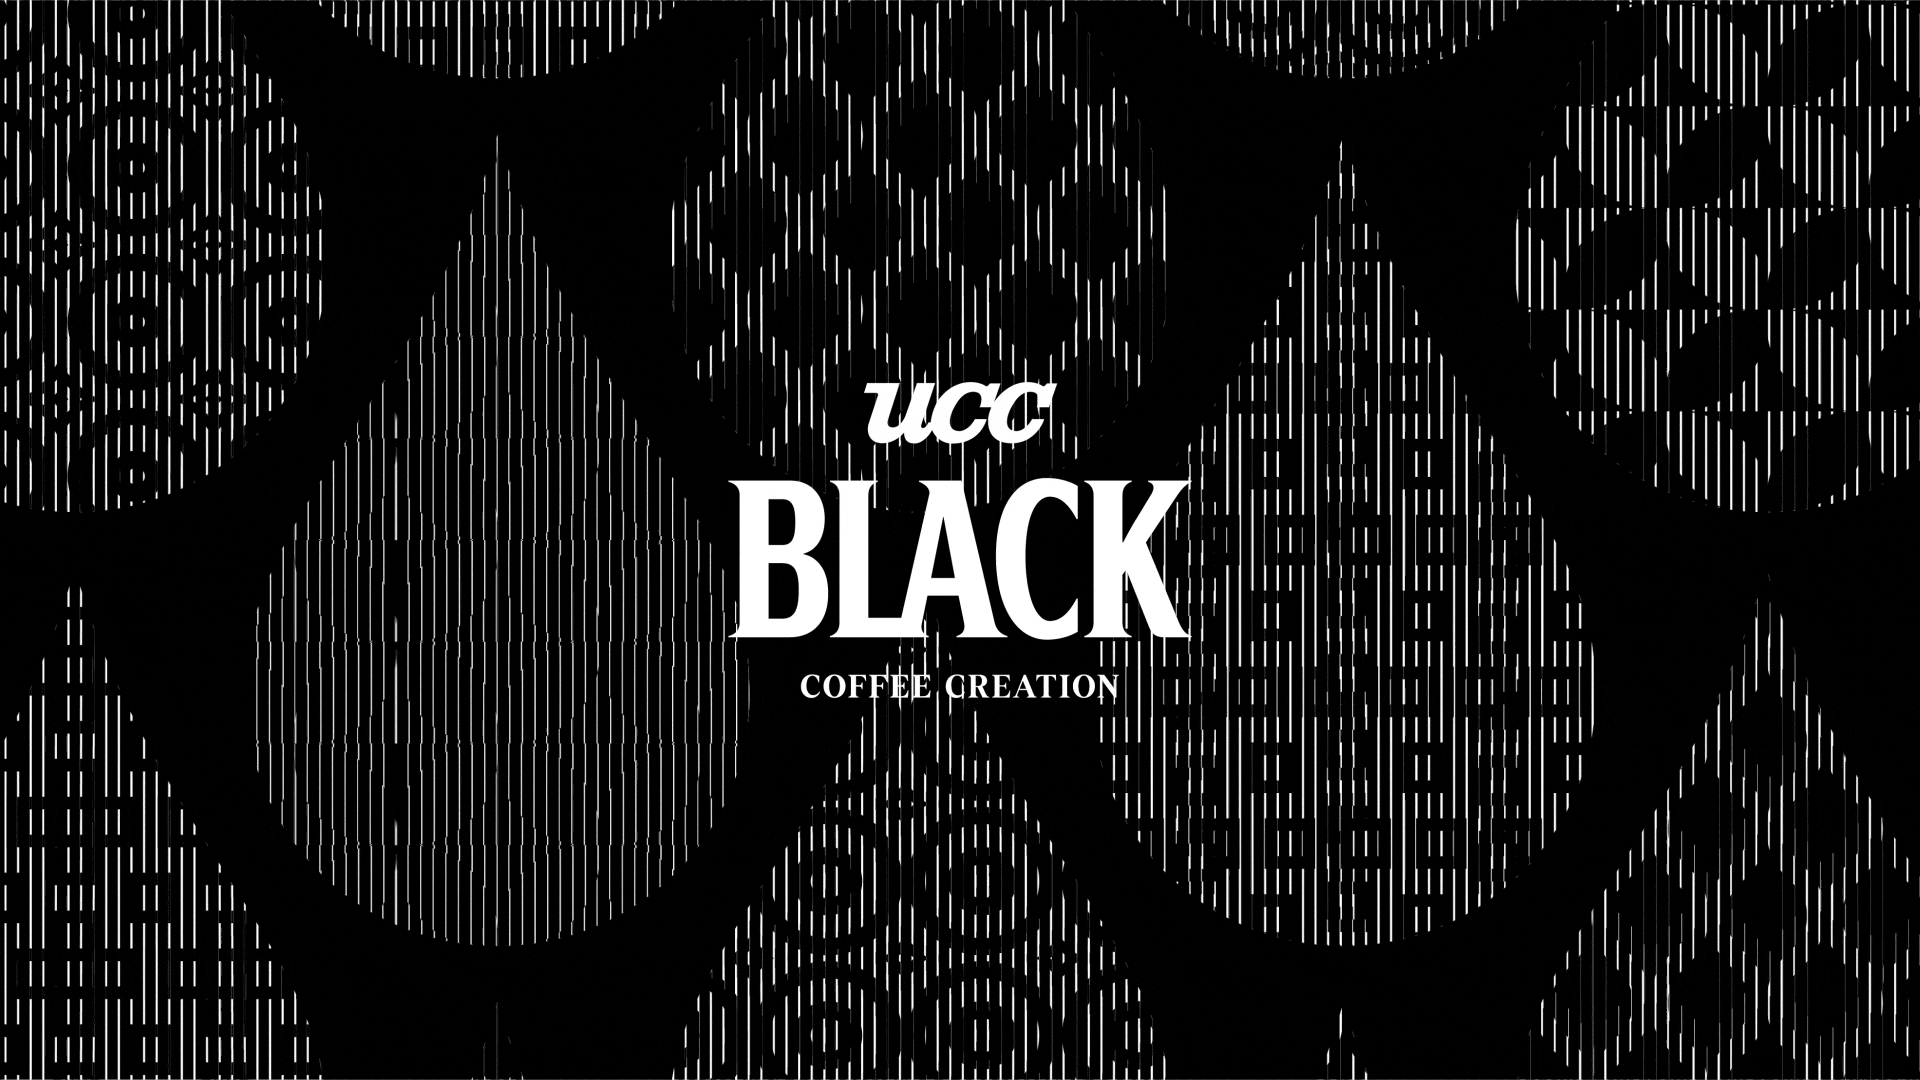 UCC BLACK COFFEE CREATION